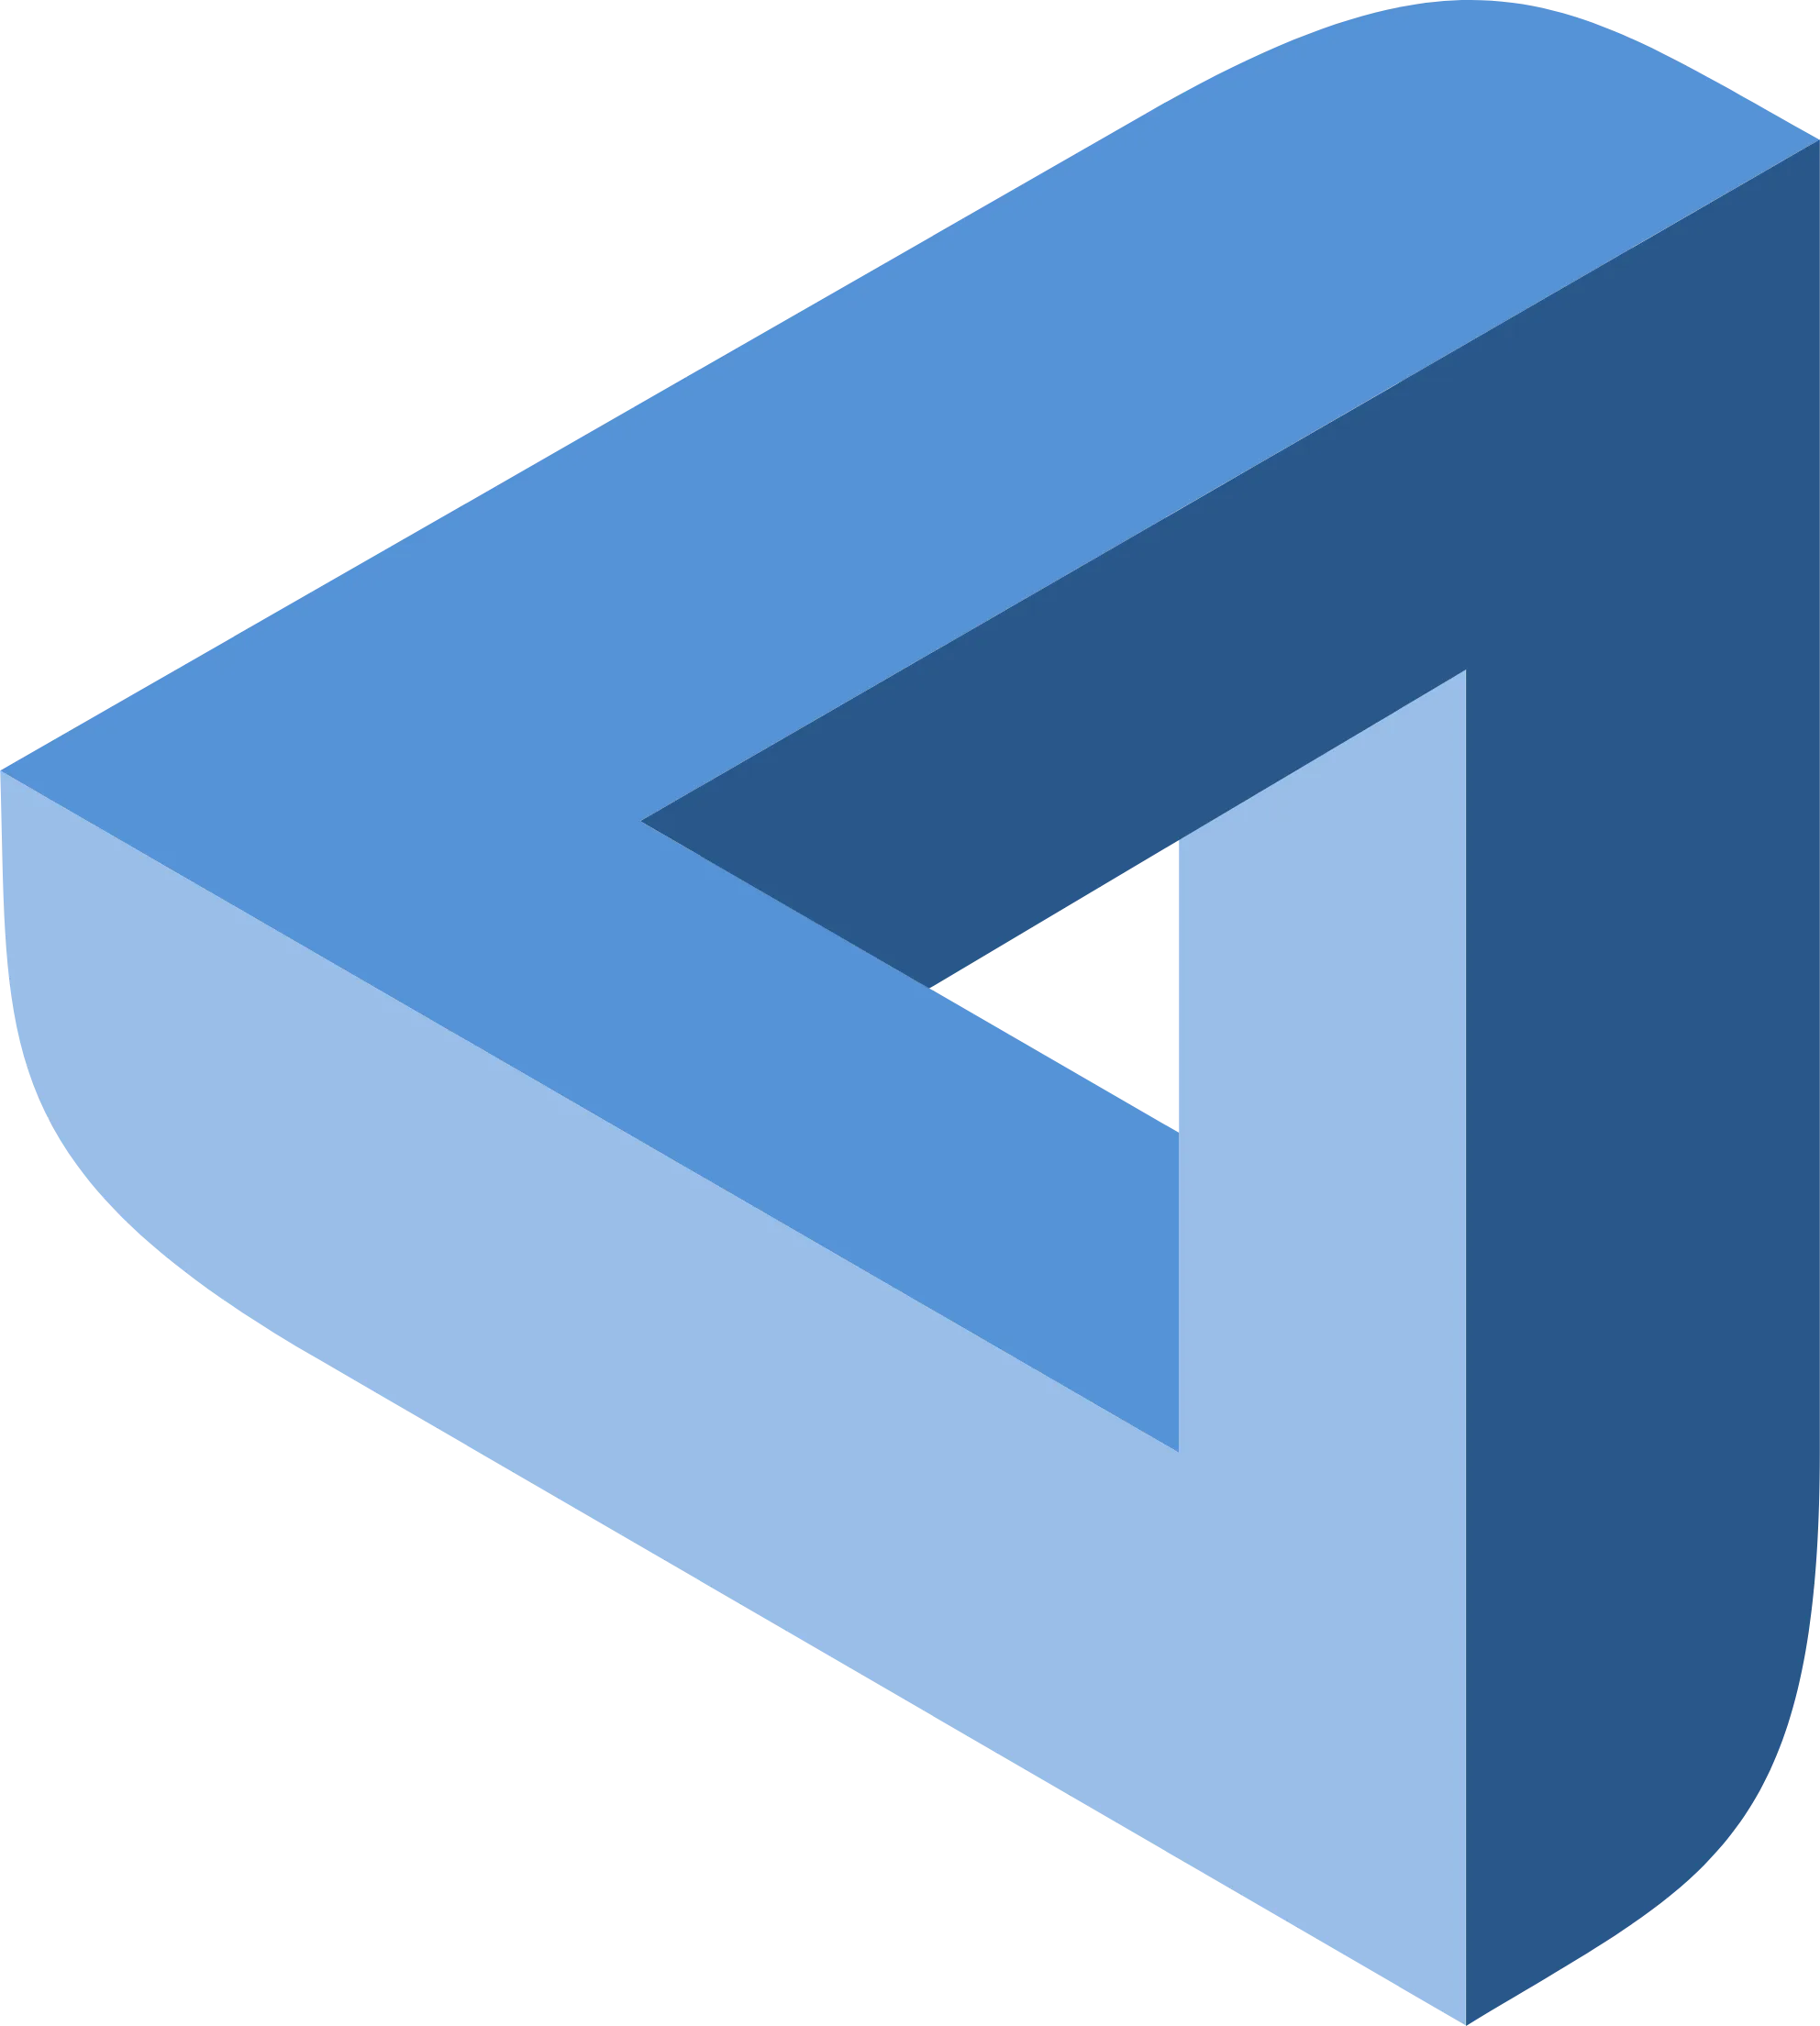 MaidSafeCoin logo in svg format